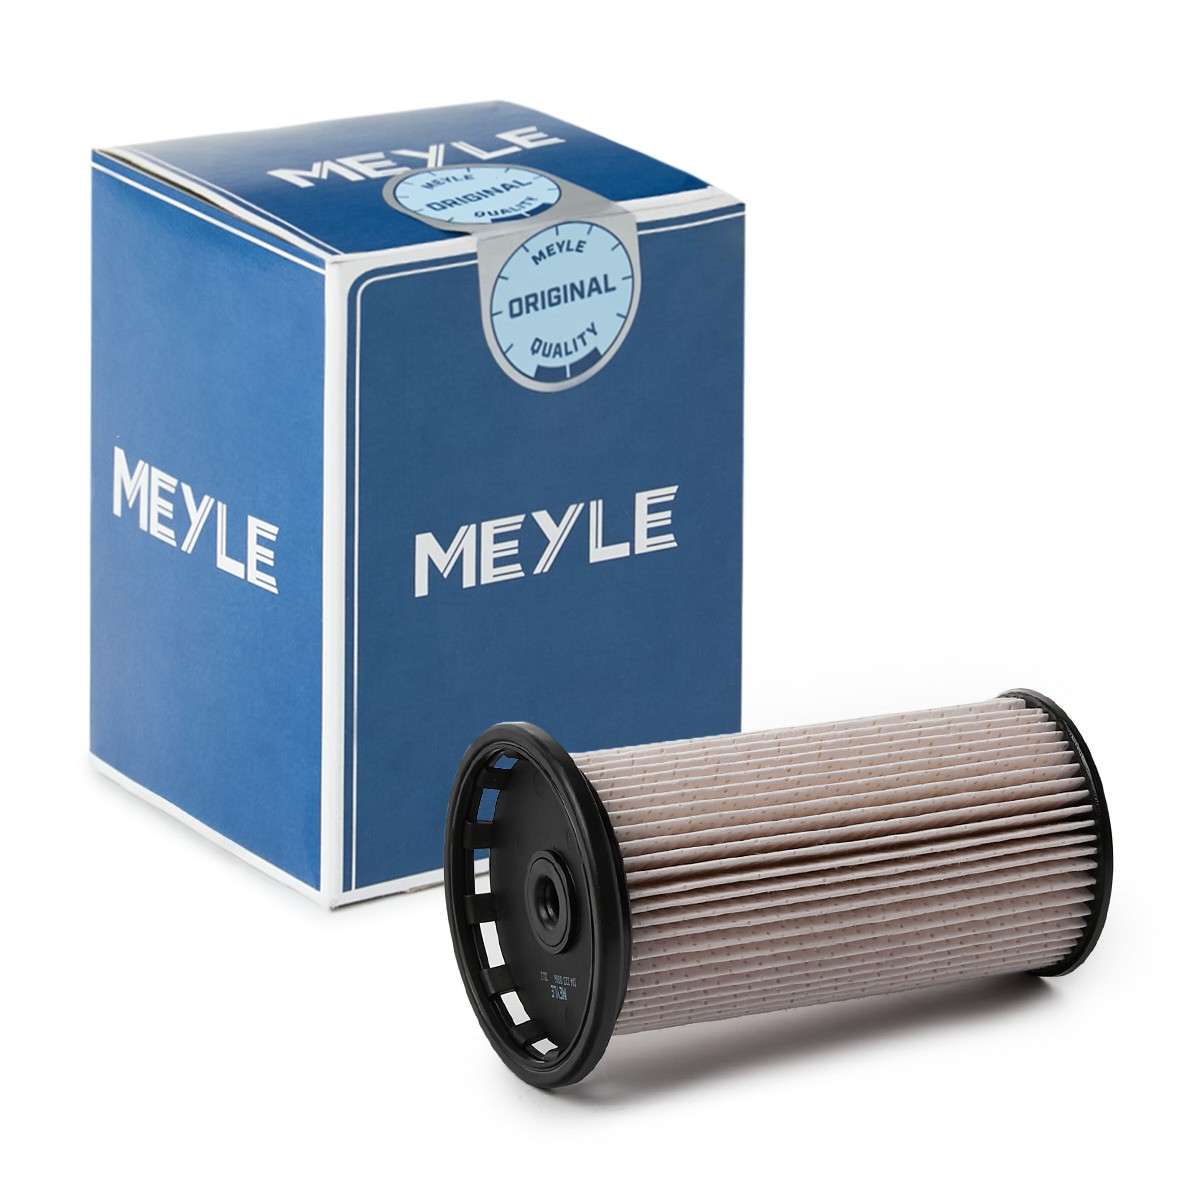 MEYLE 1143230006 Fuel filters Filter Insert, ORIGINAL Quality